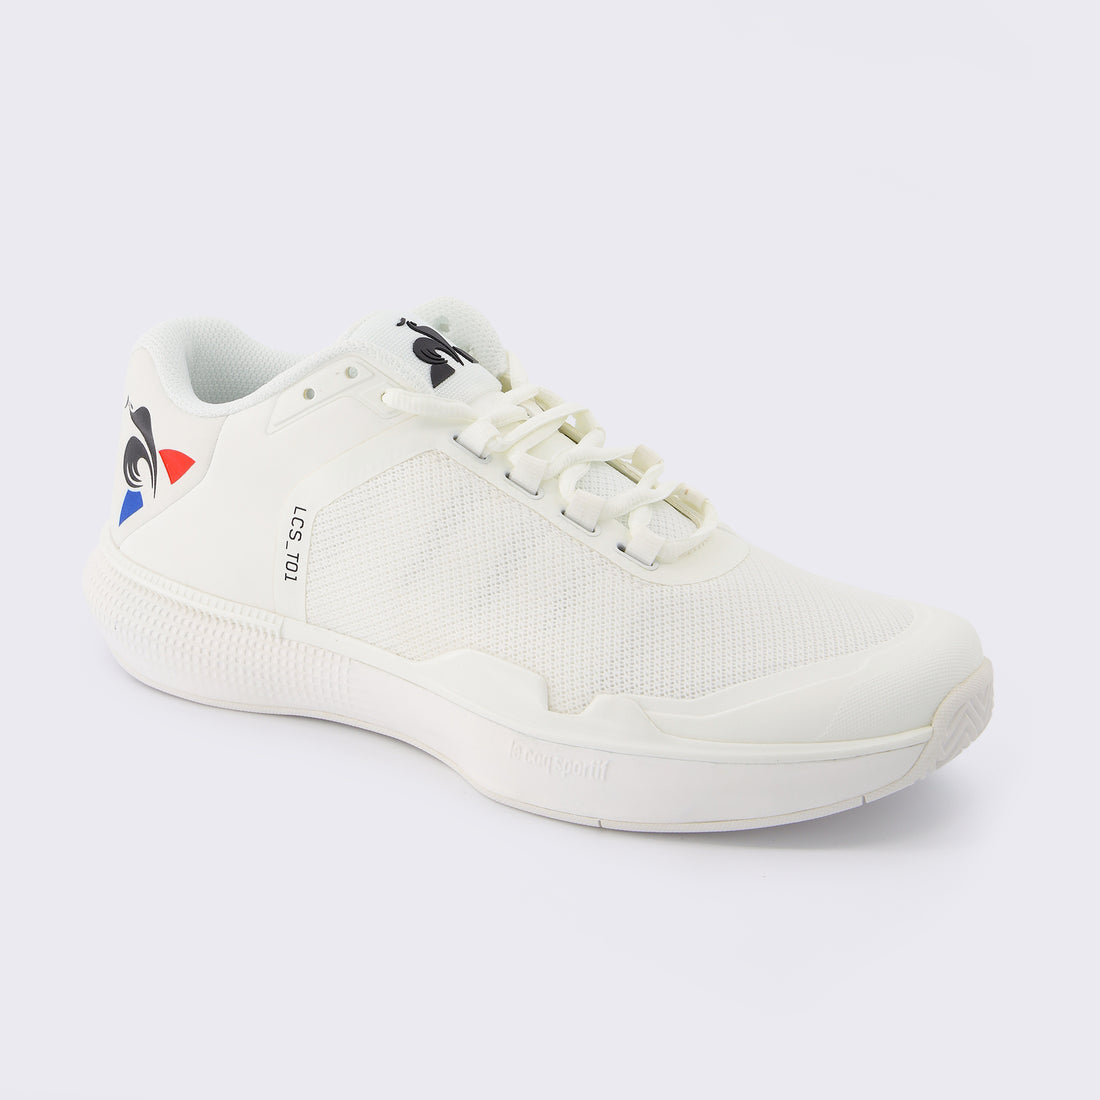 2010997-FUTUR LCS T01 CLAY bright white  | Shoes de tennis FUTUR LCS T01 CLAY Unisex